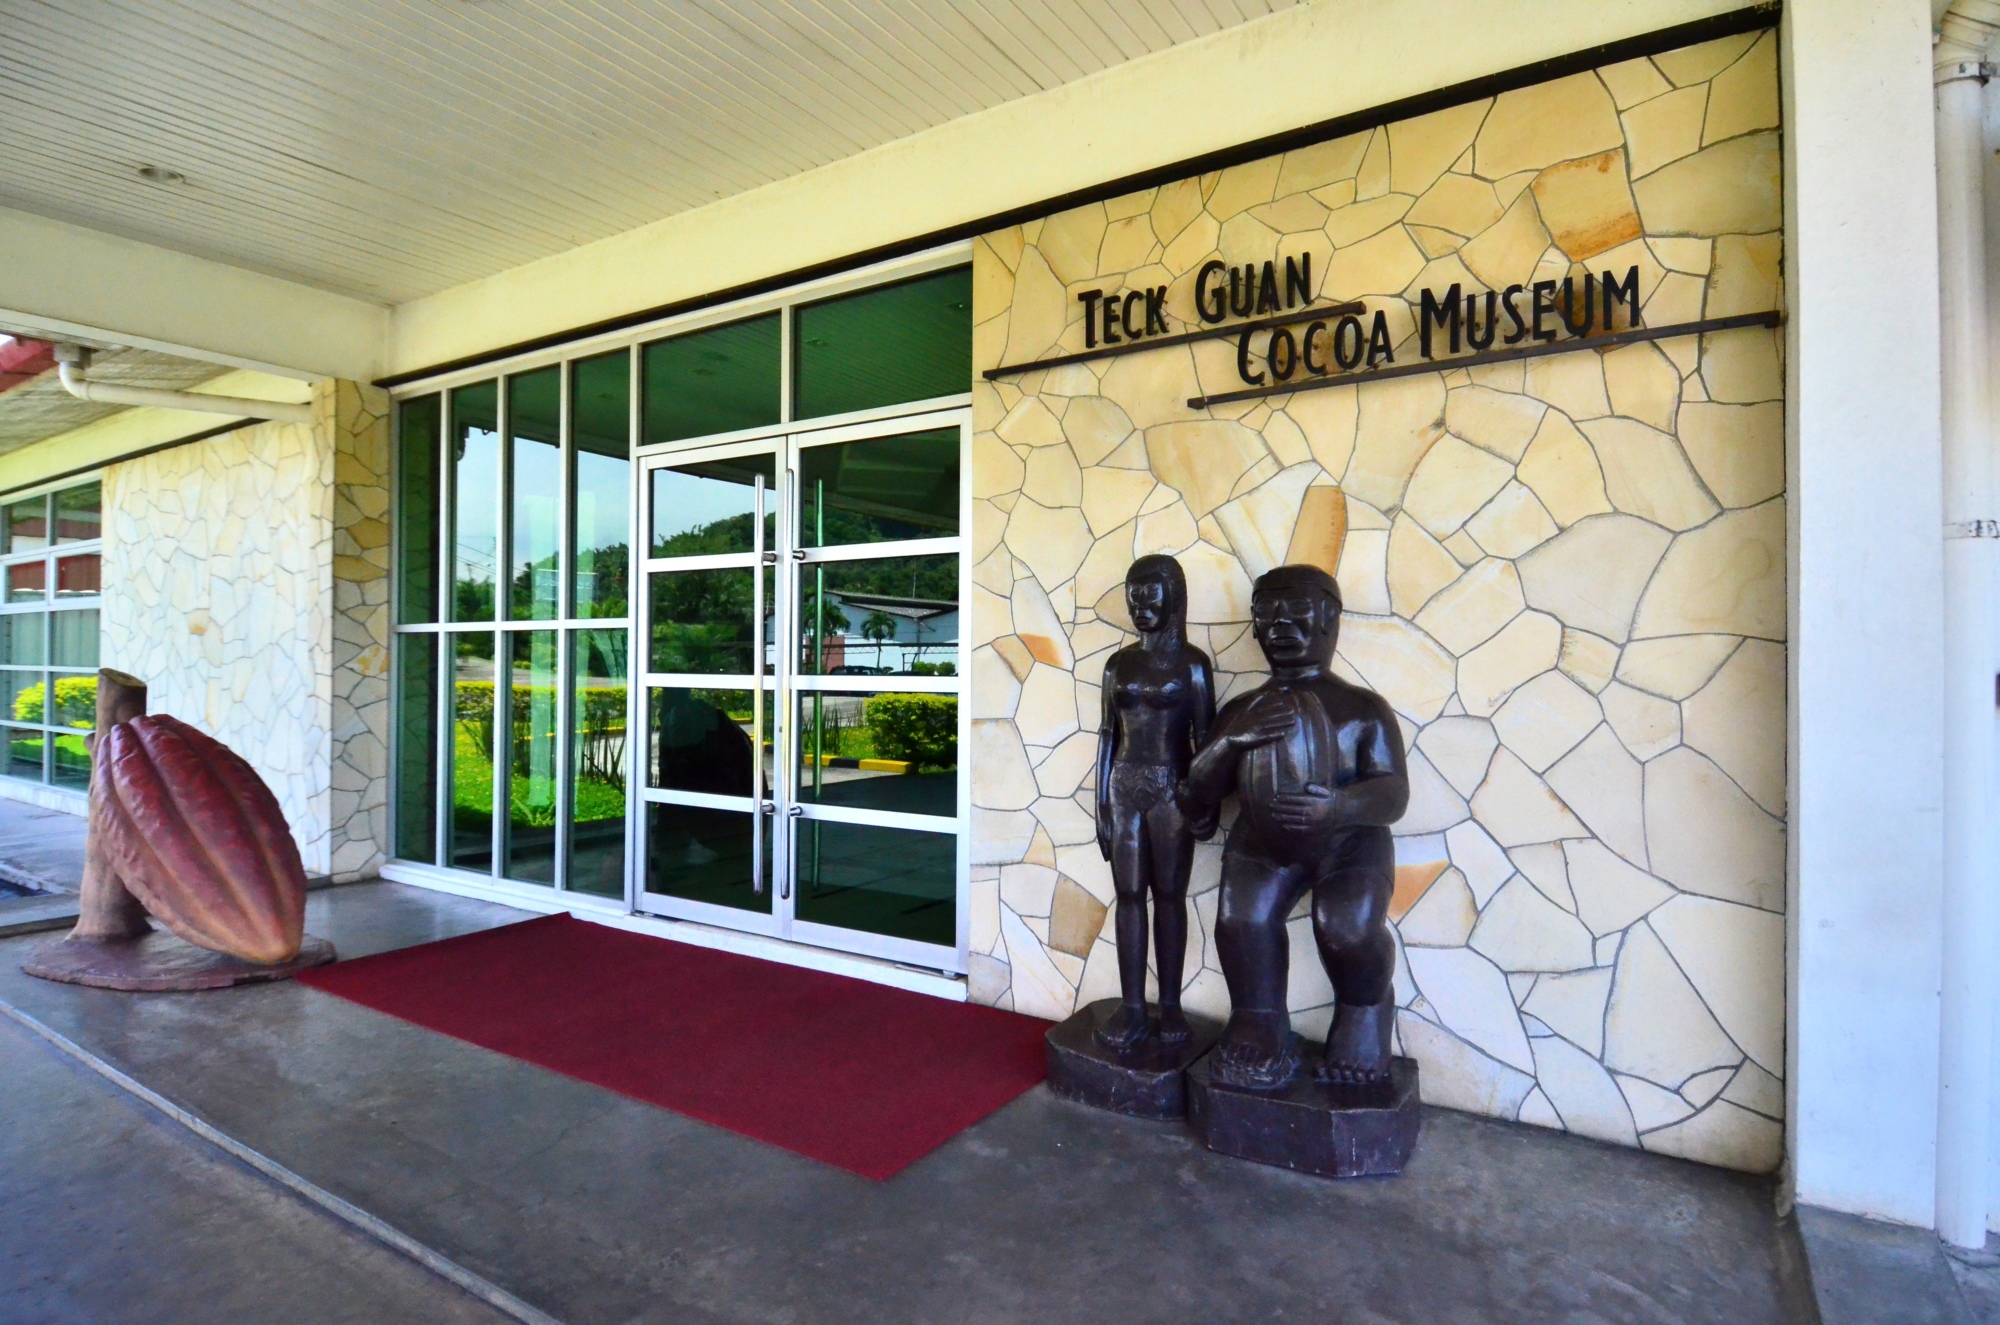 Teck Guan Cocoa Museum